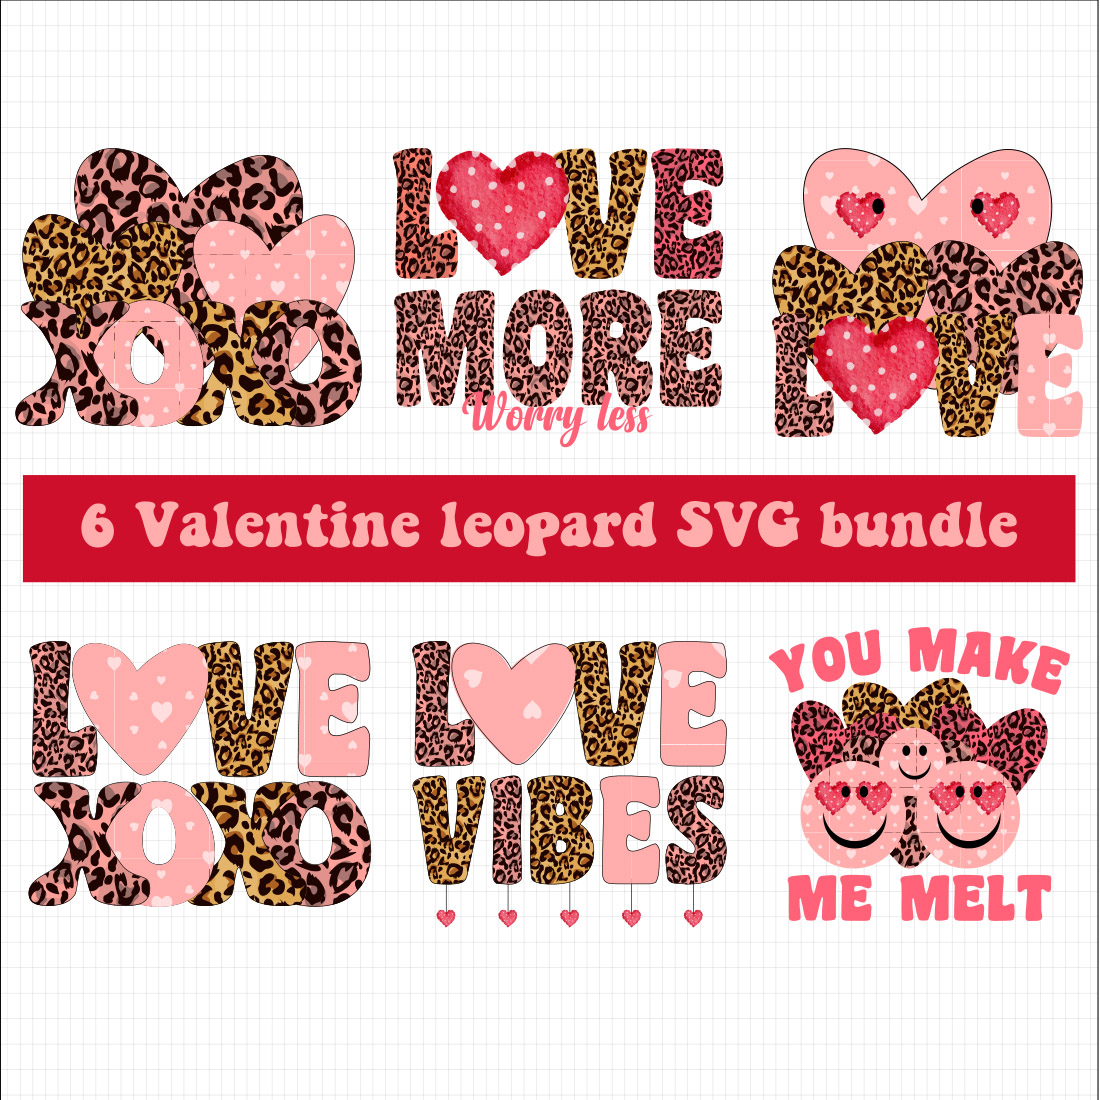 Valentine's Day Leopard SVG Bundle main cover.